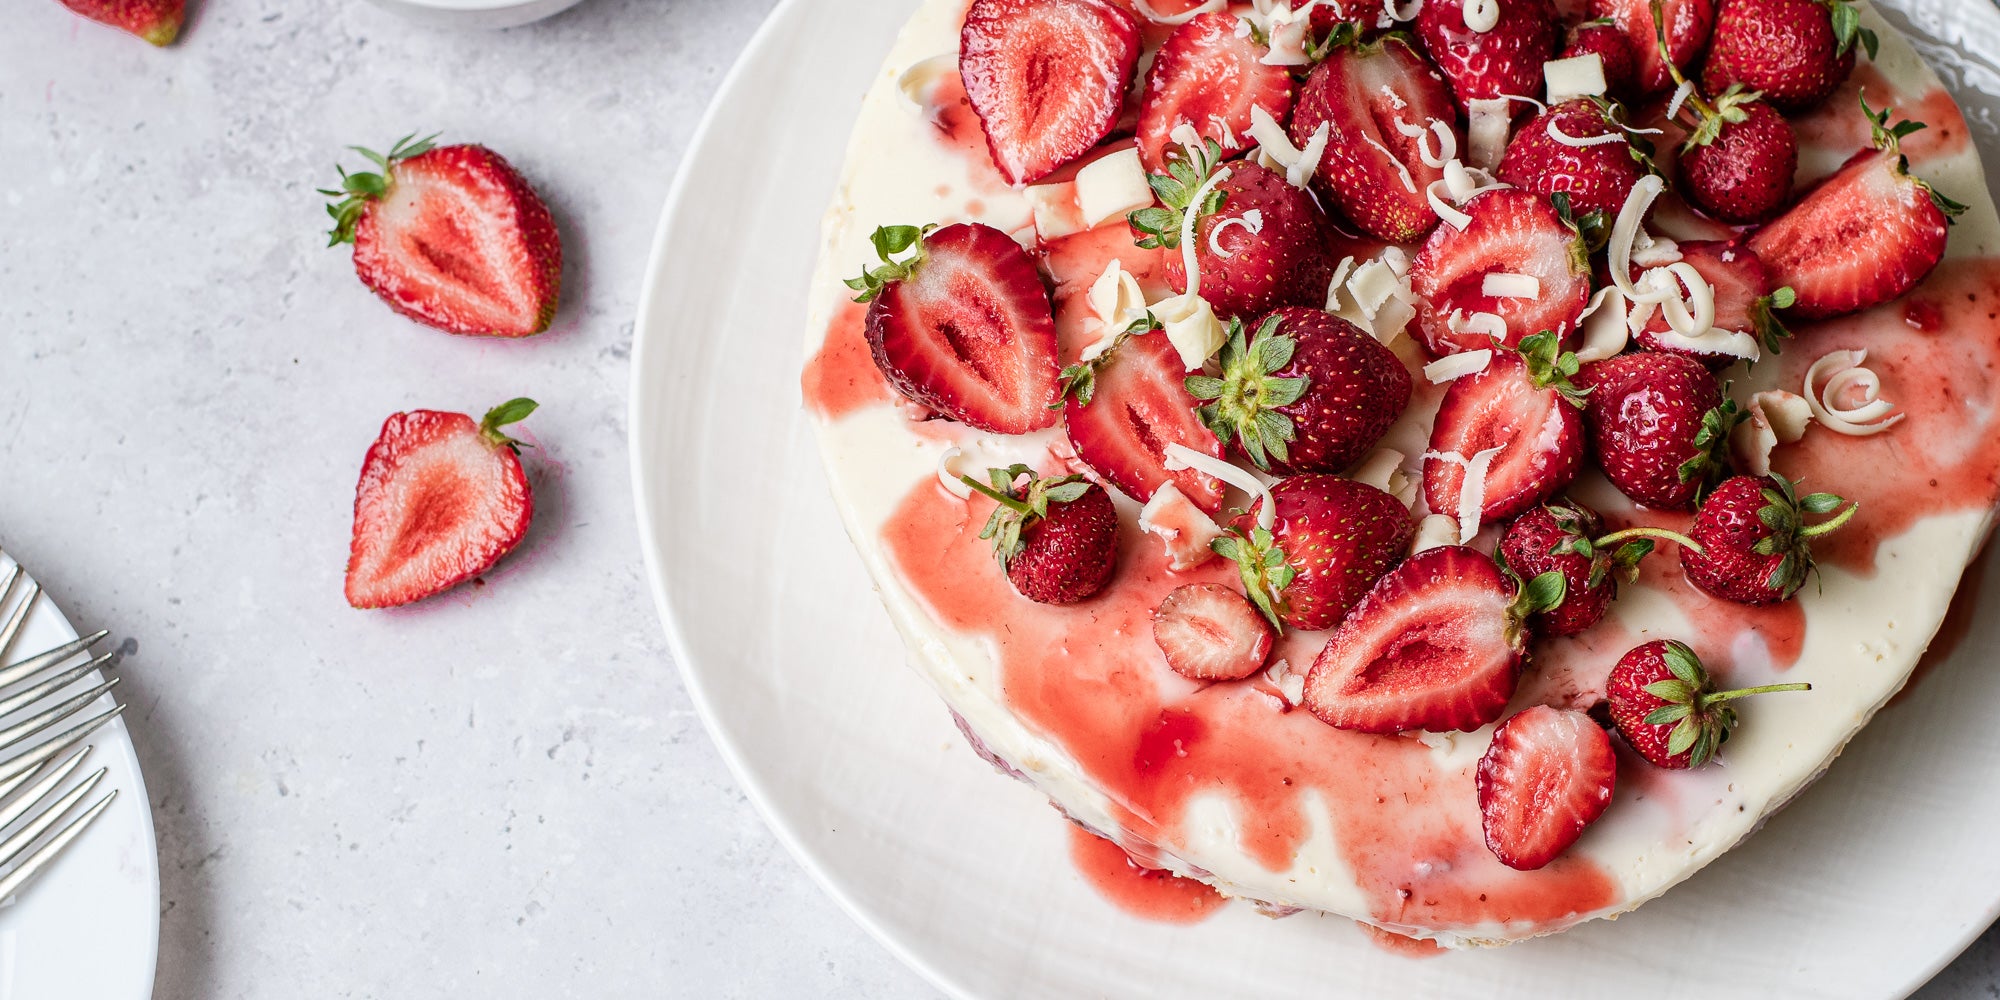 White Chocolate & Strawberry Cheesecake topped with strawberries and white chocolate shavings